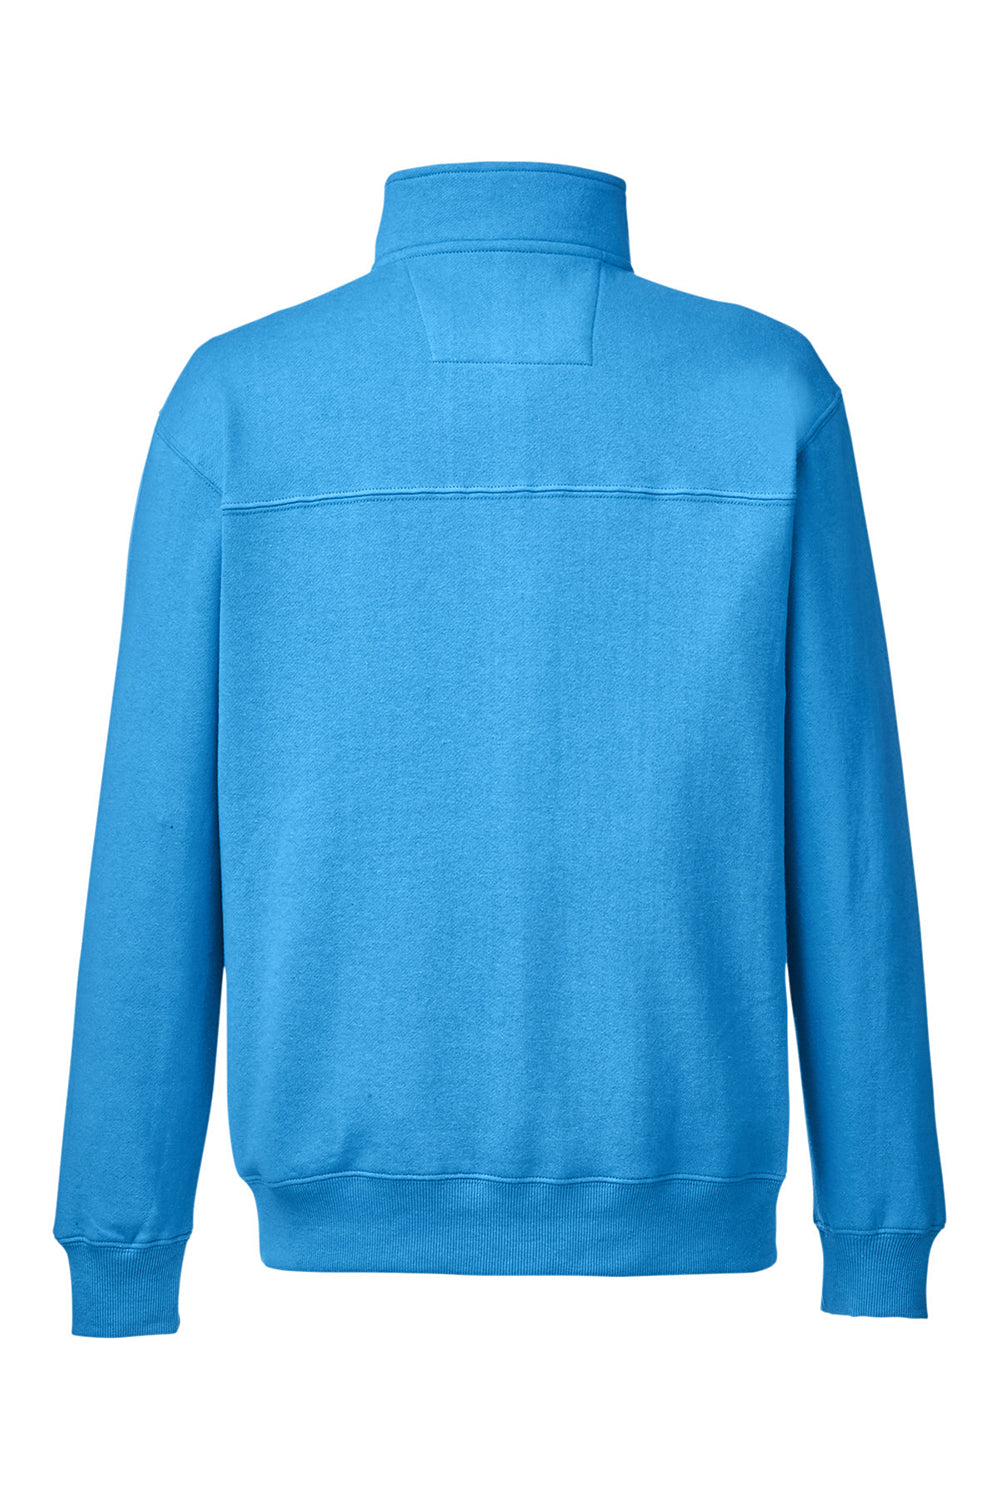 Nautica N17176 Mens Anchor 1/4 Zip Sweatshirt Azure Blue Flat Back